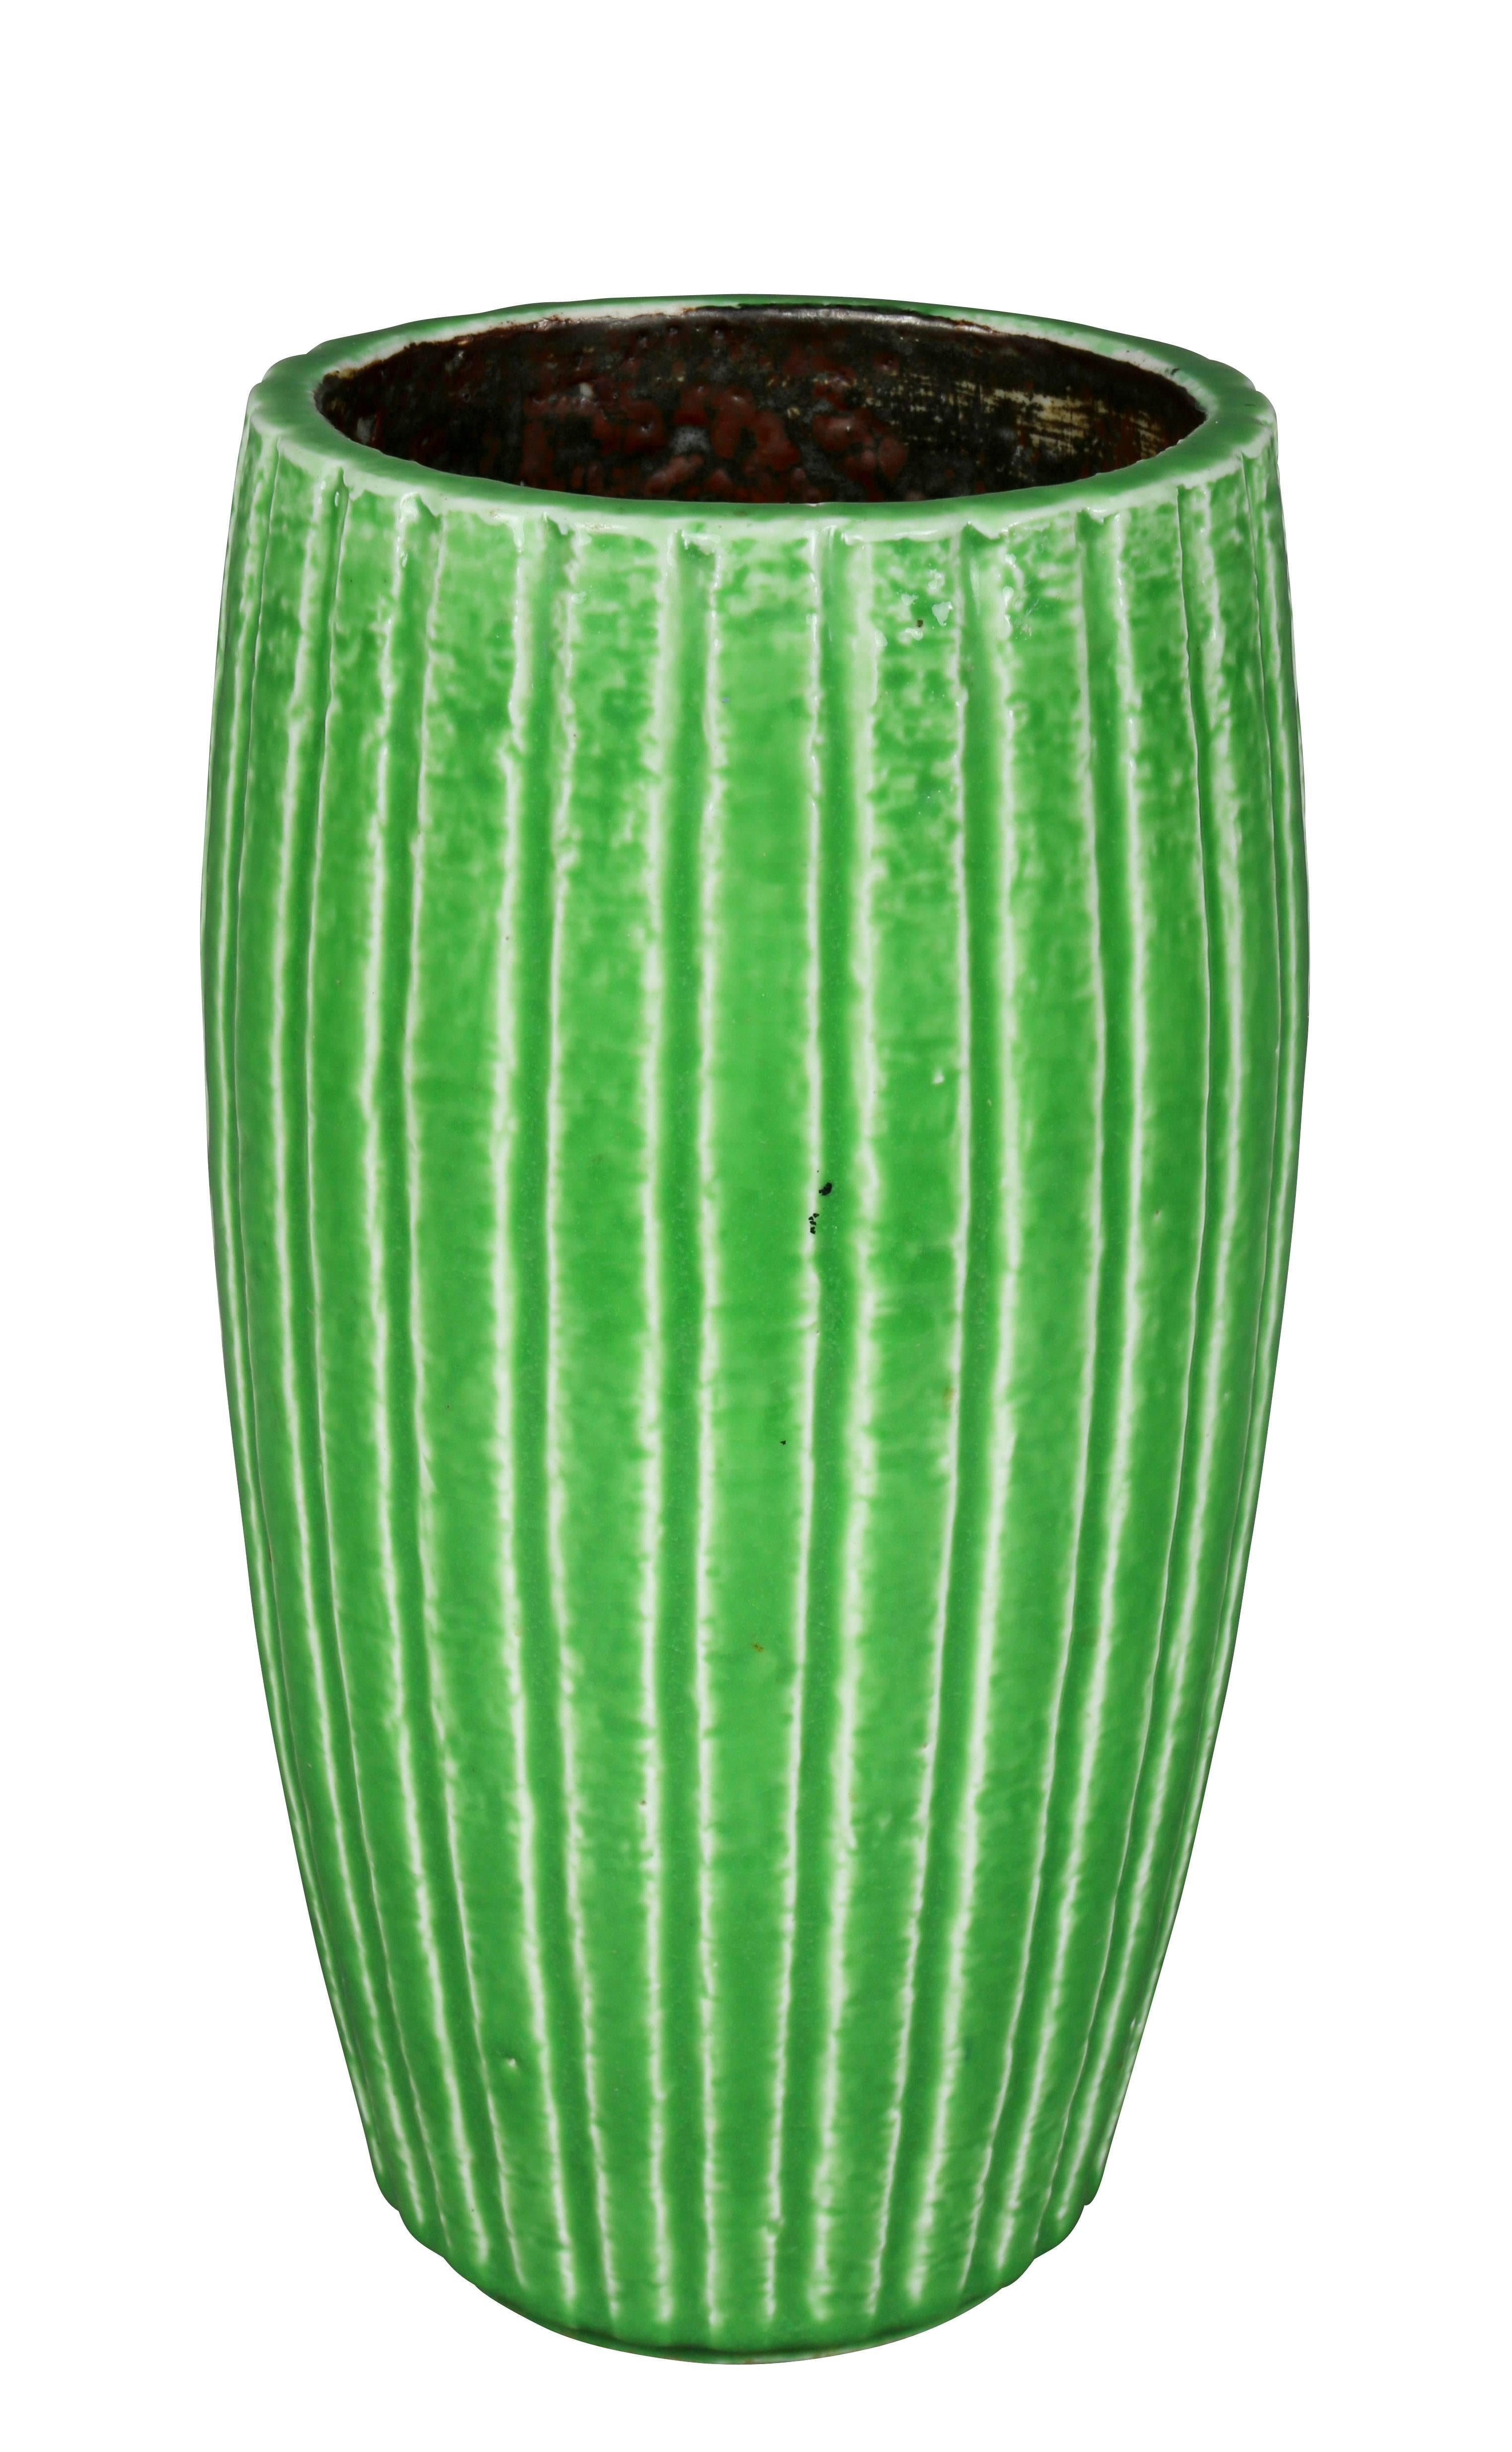 Green glaze, vertical ribbed cylindrical form. Signed on base.